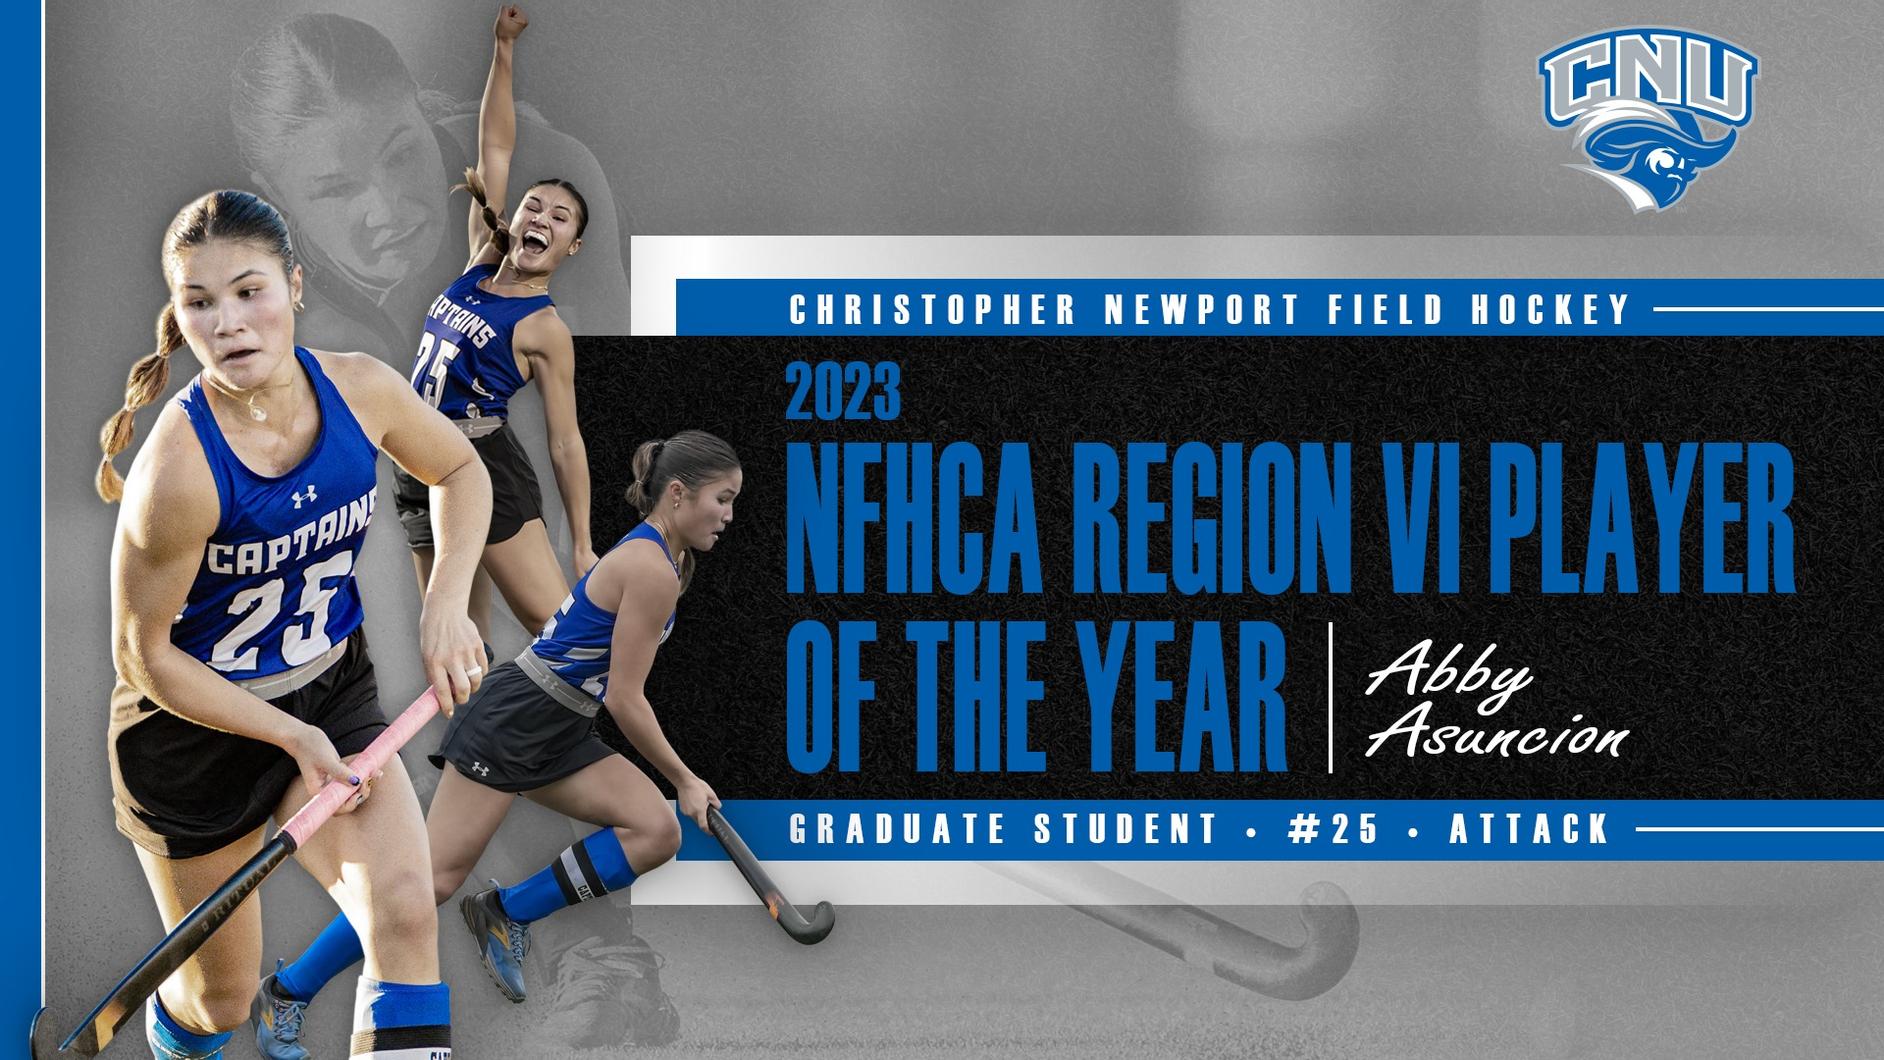 CNU's Abby Asuncion Honored as NFHCA Region VI Player of the Year